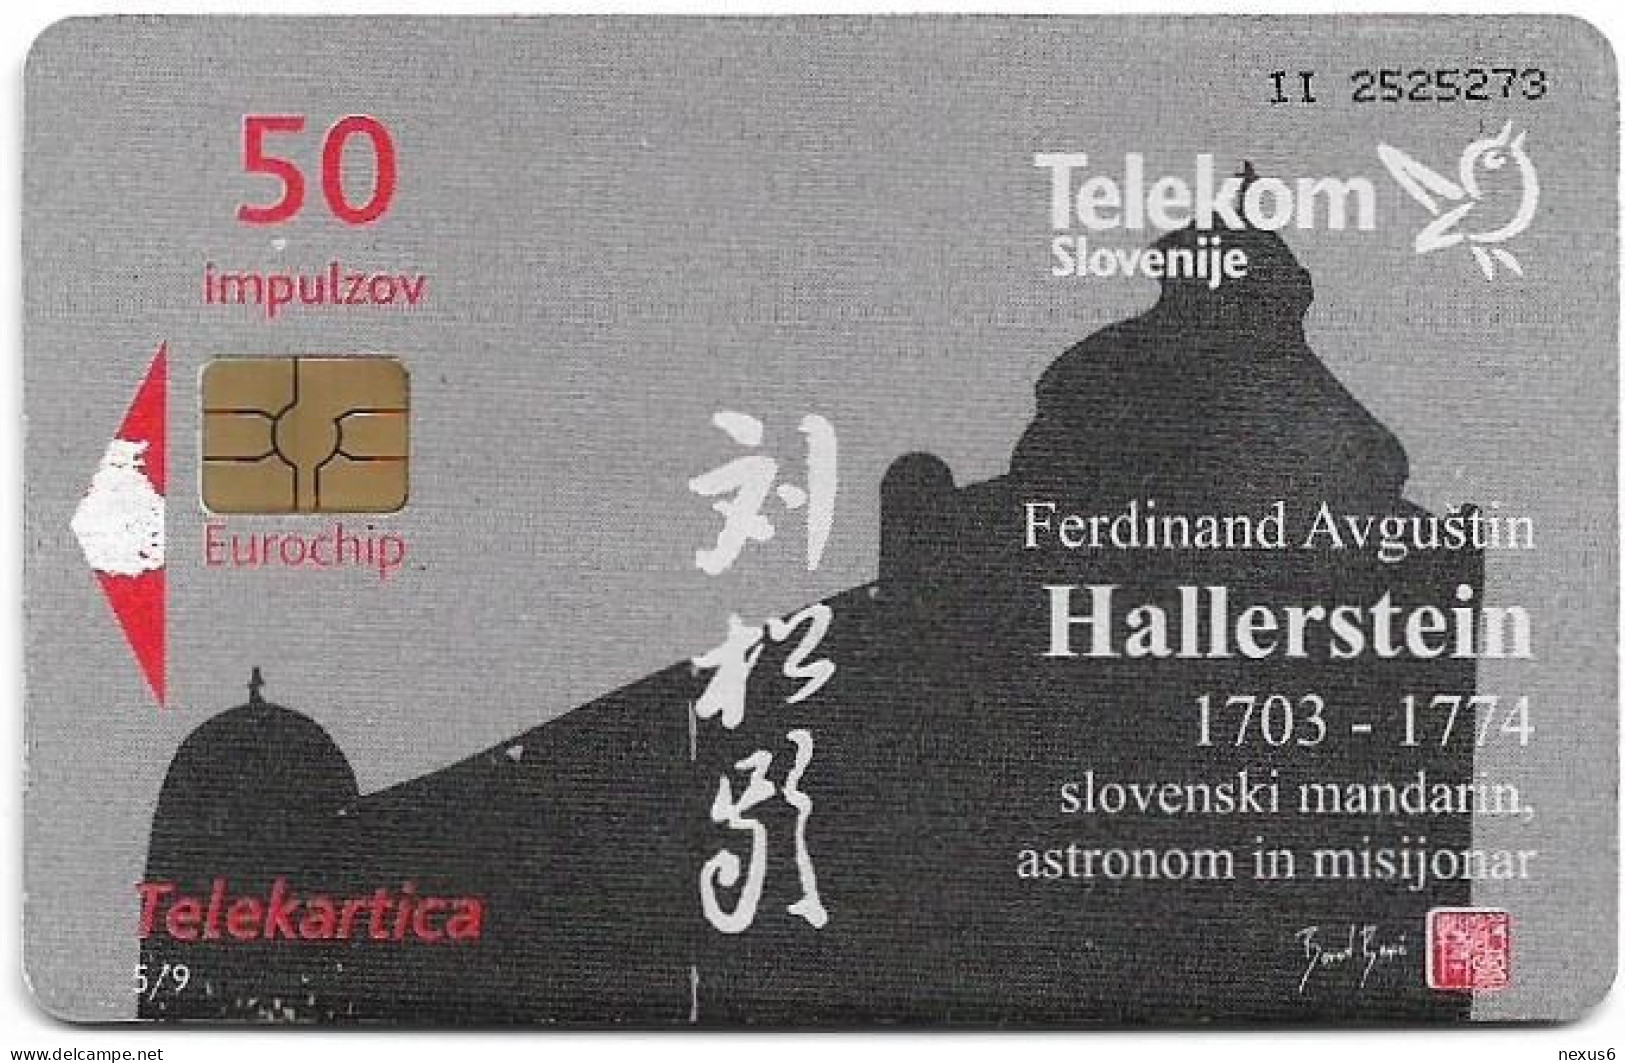 Slovenia - Telekom Slovenije - Mandarin F. A. Hallerstein - 5/9, Gem5 Red, Long Cn., 10.2007, 50Units, 5.000ex, Used - Slovenia